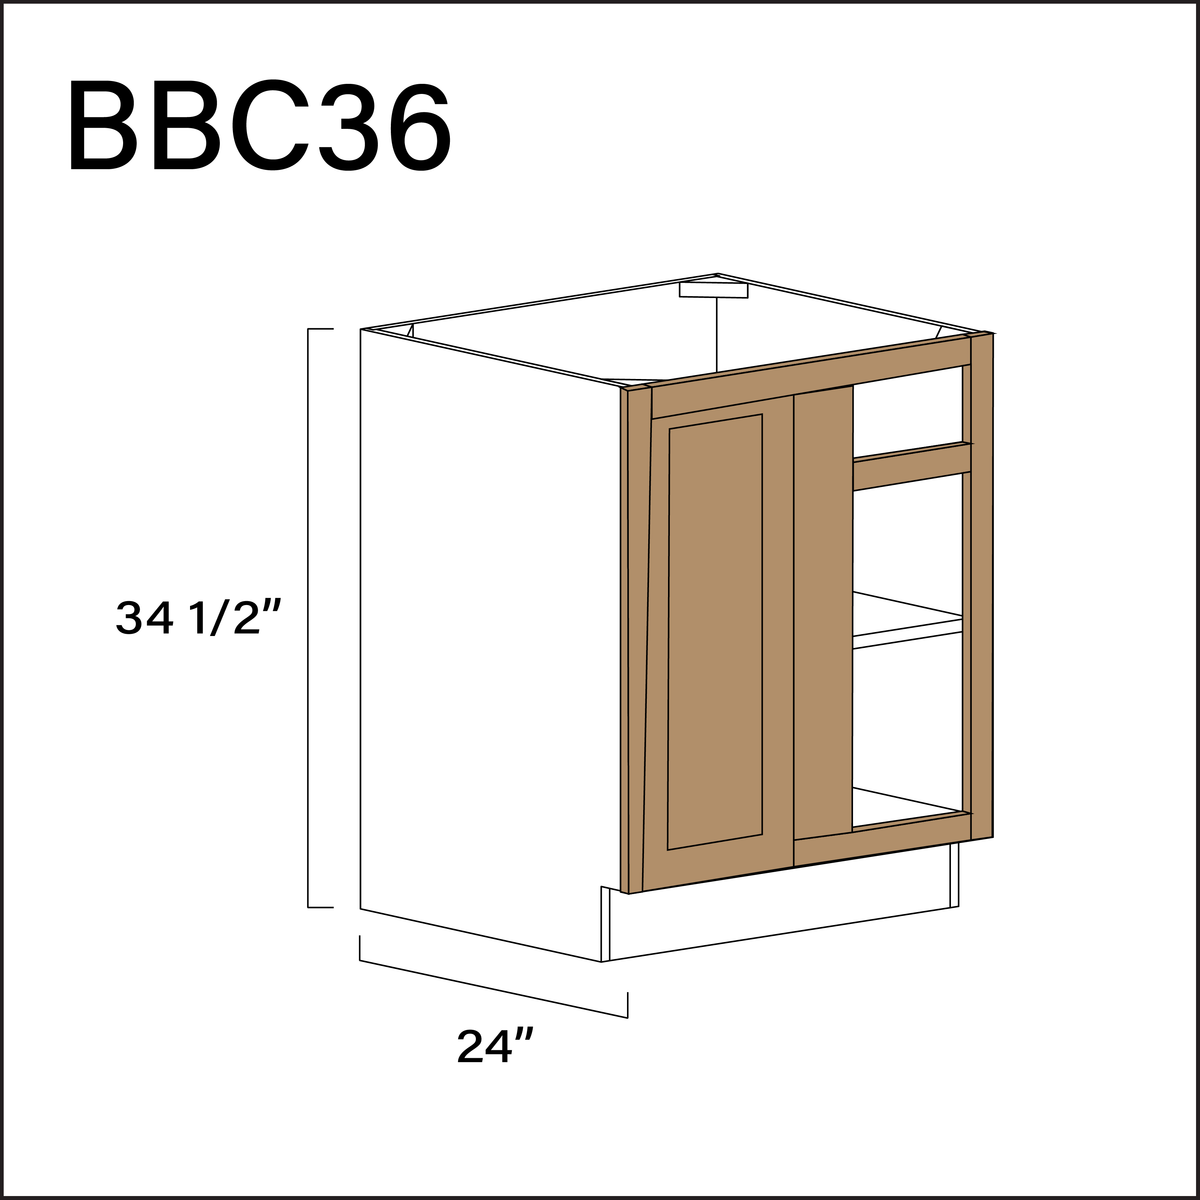 Alton Iced Mocha Base Blind Corner Cabinet - 27" W x 34.5" H x 24" D